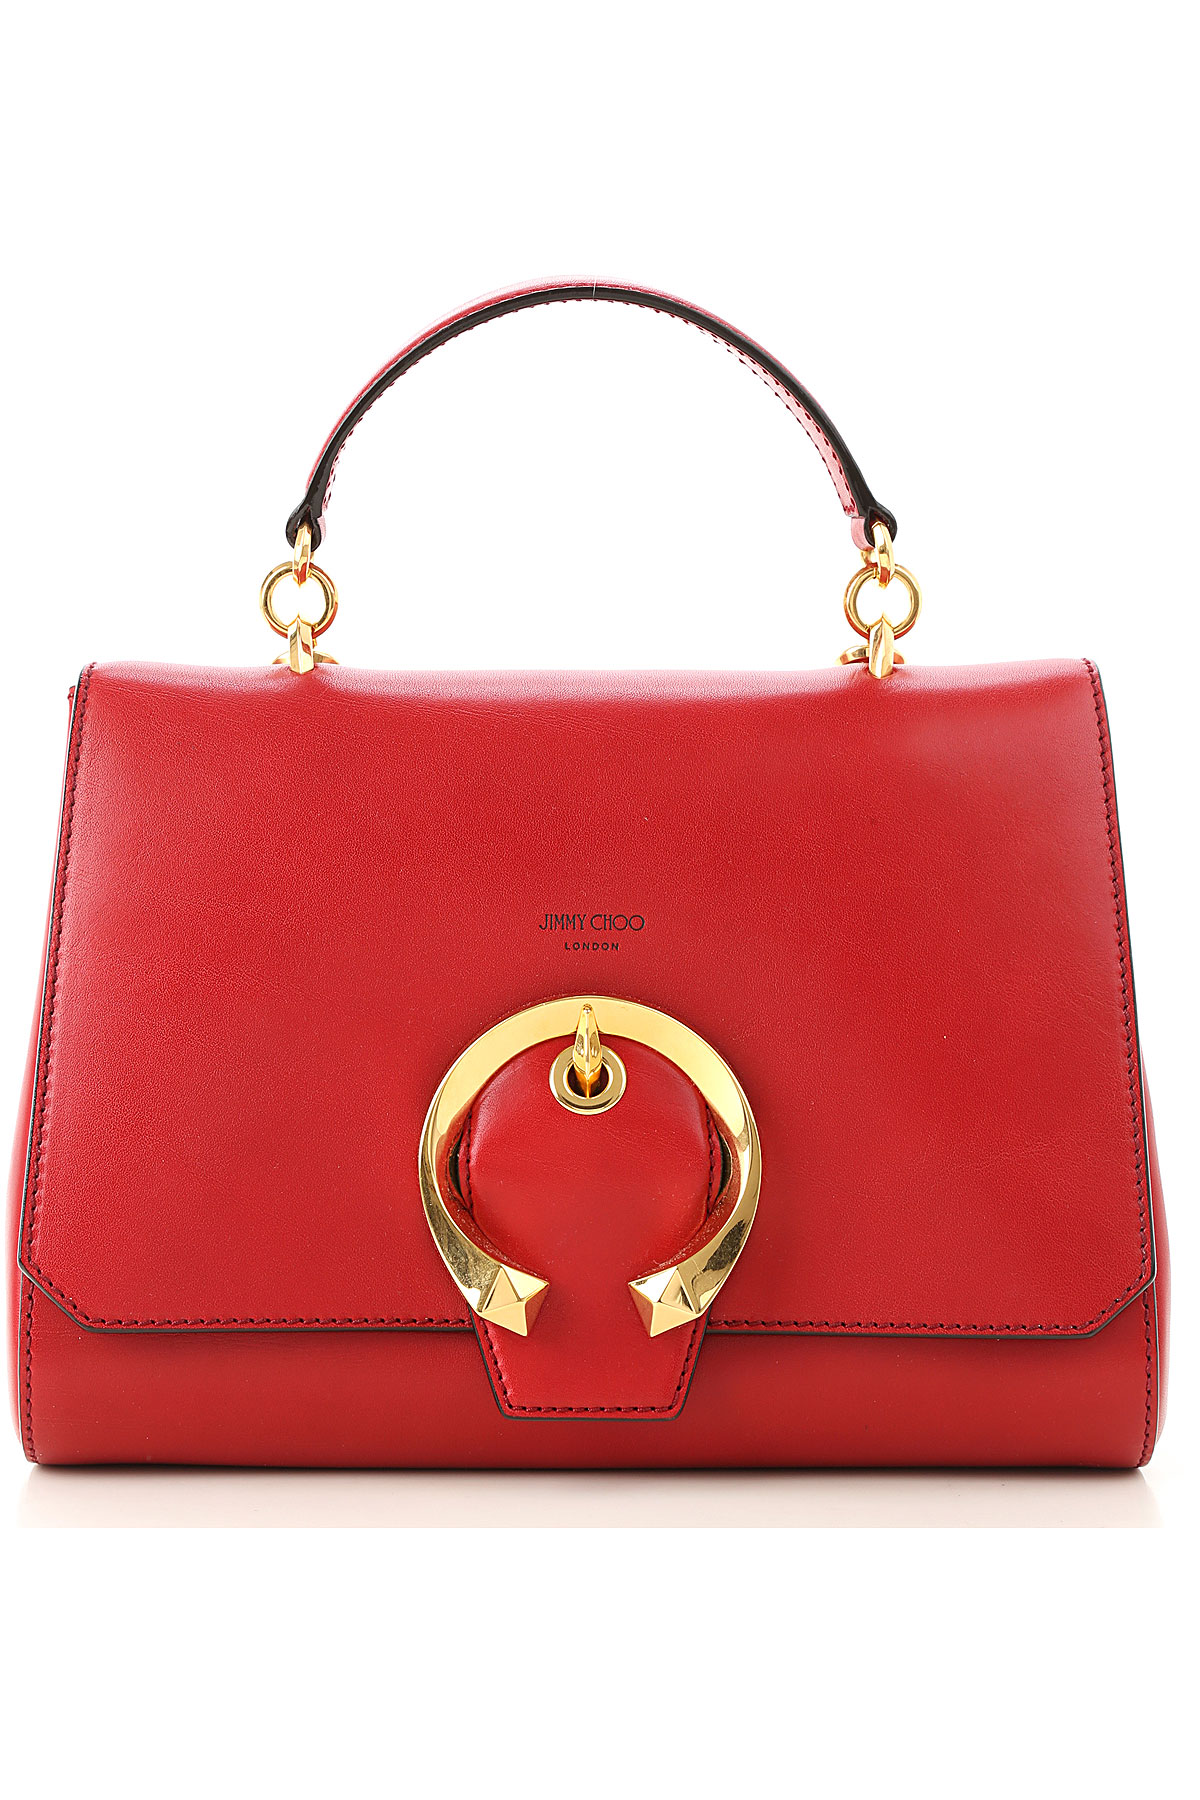 Handbags Jimmy Choo, Style code: madeline-tra-060016